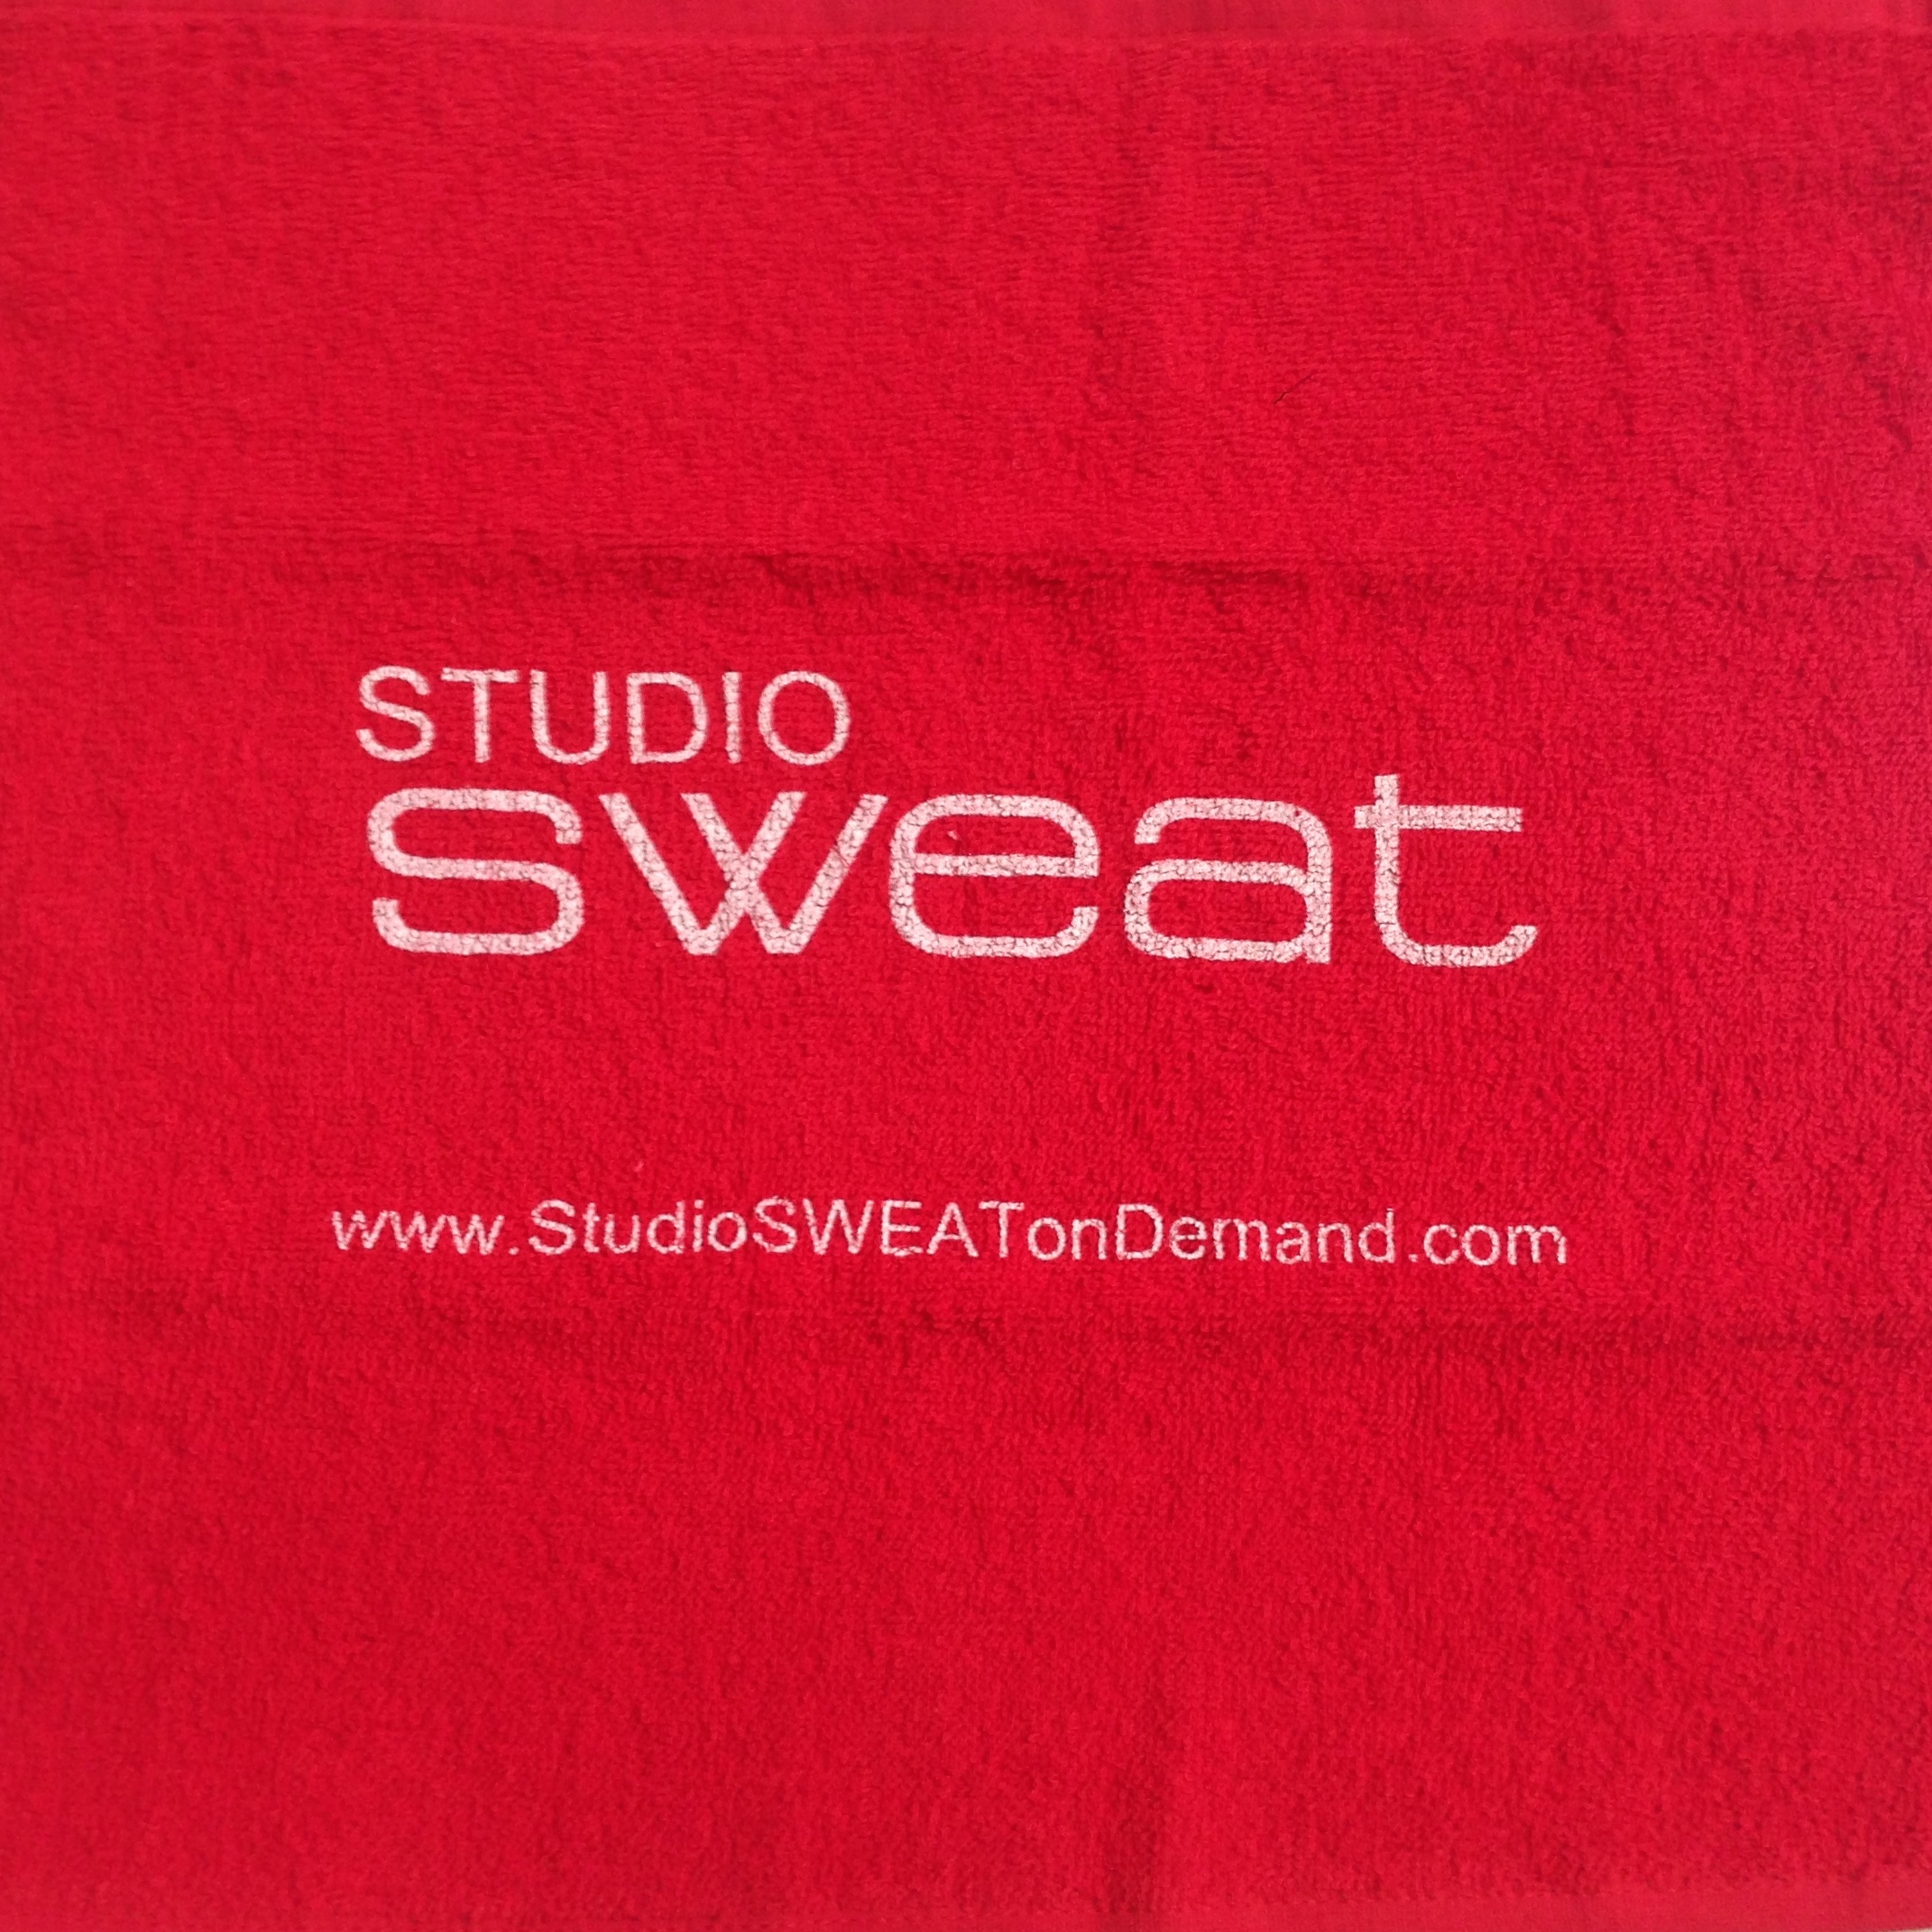 Studio SWEAT Rally Towel | Studio SWEAT onDemand